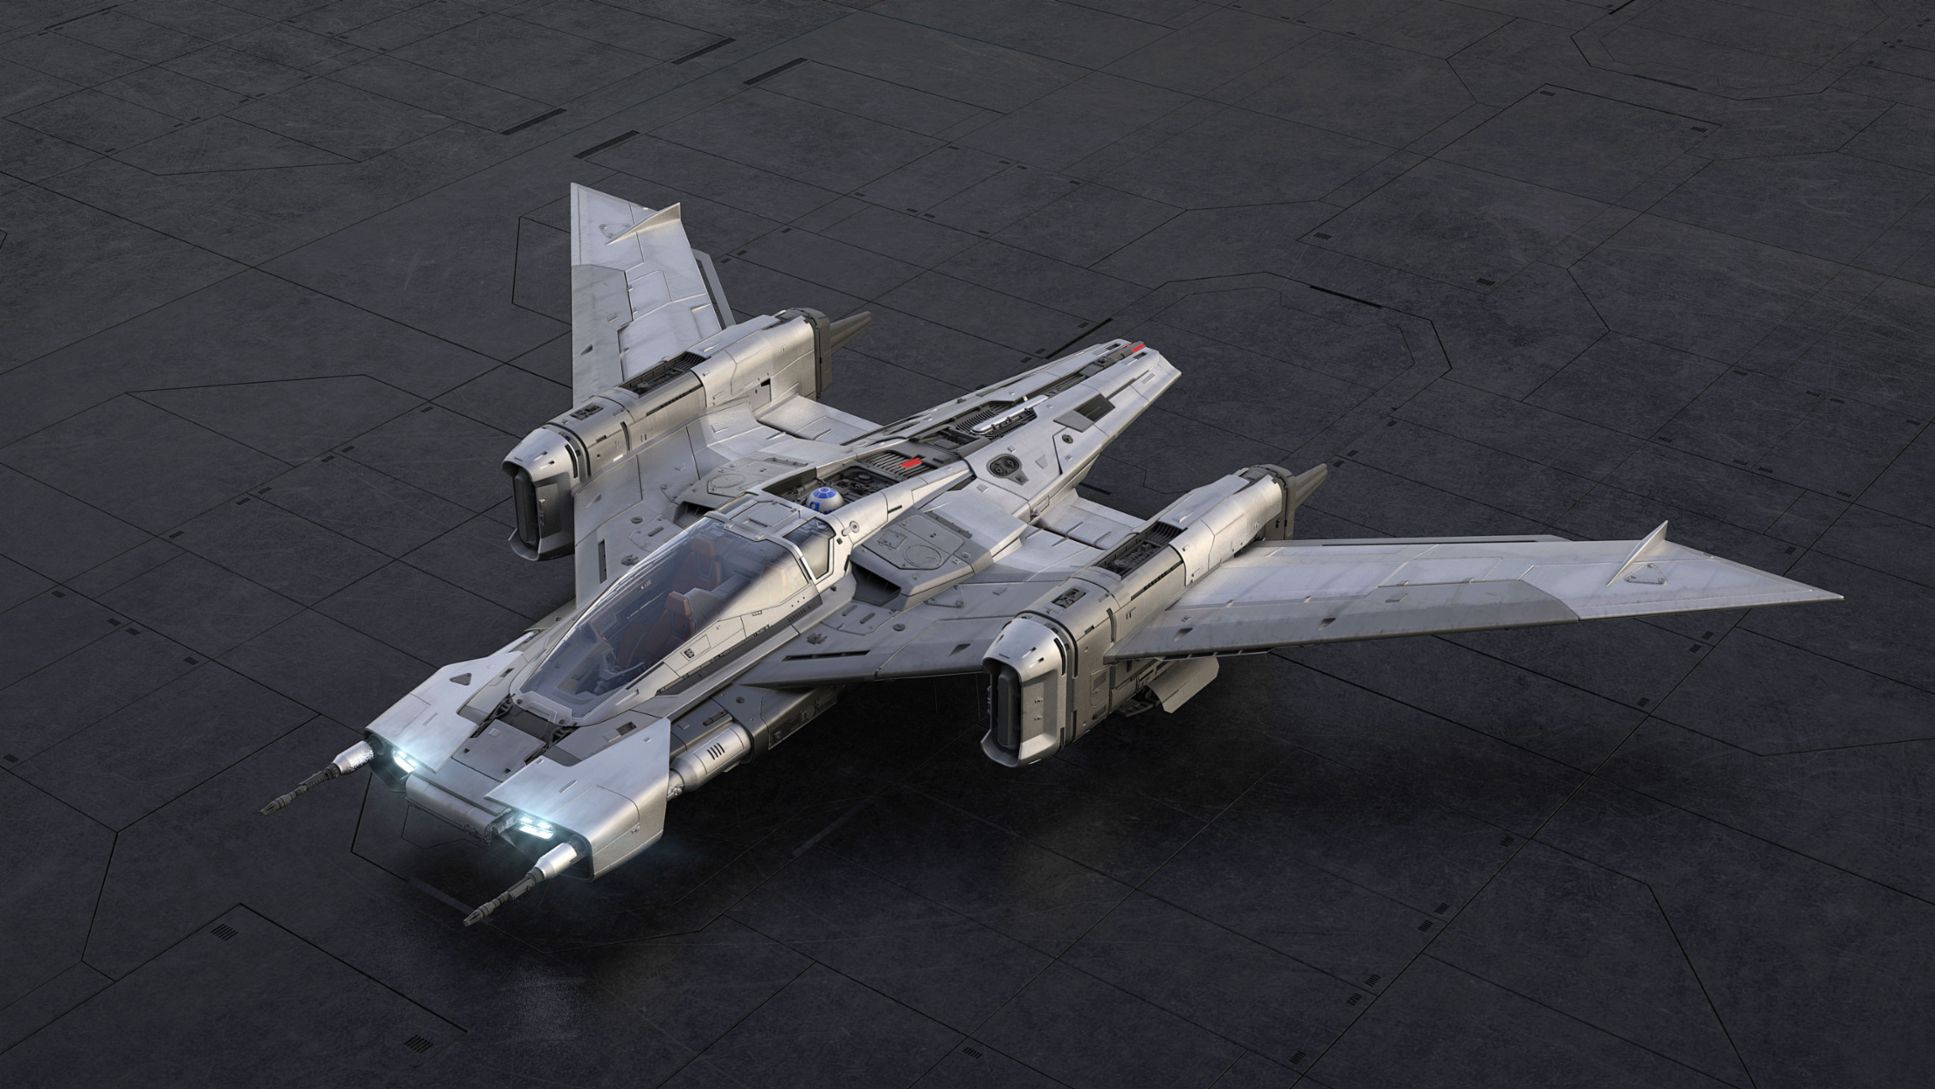 Nave espacial Tri-Wing S-91x Pegasus Starfighter, Star Wars, 2019, Porsche AG